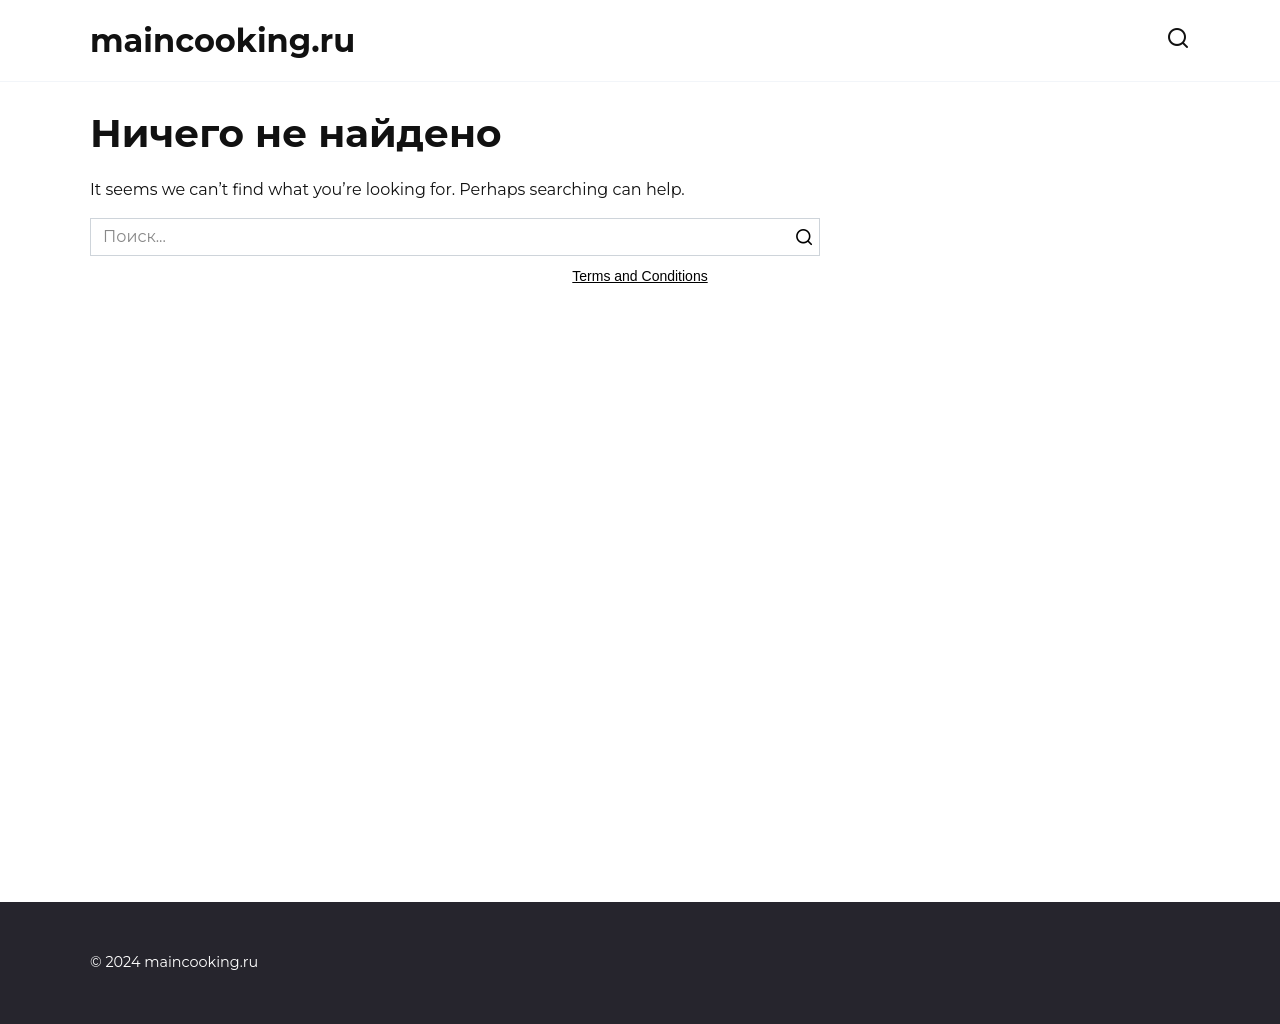 maincooking.ru